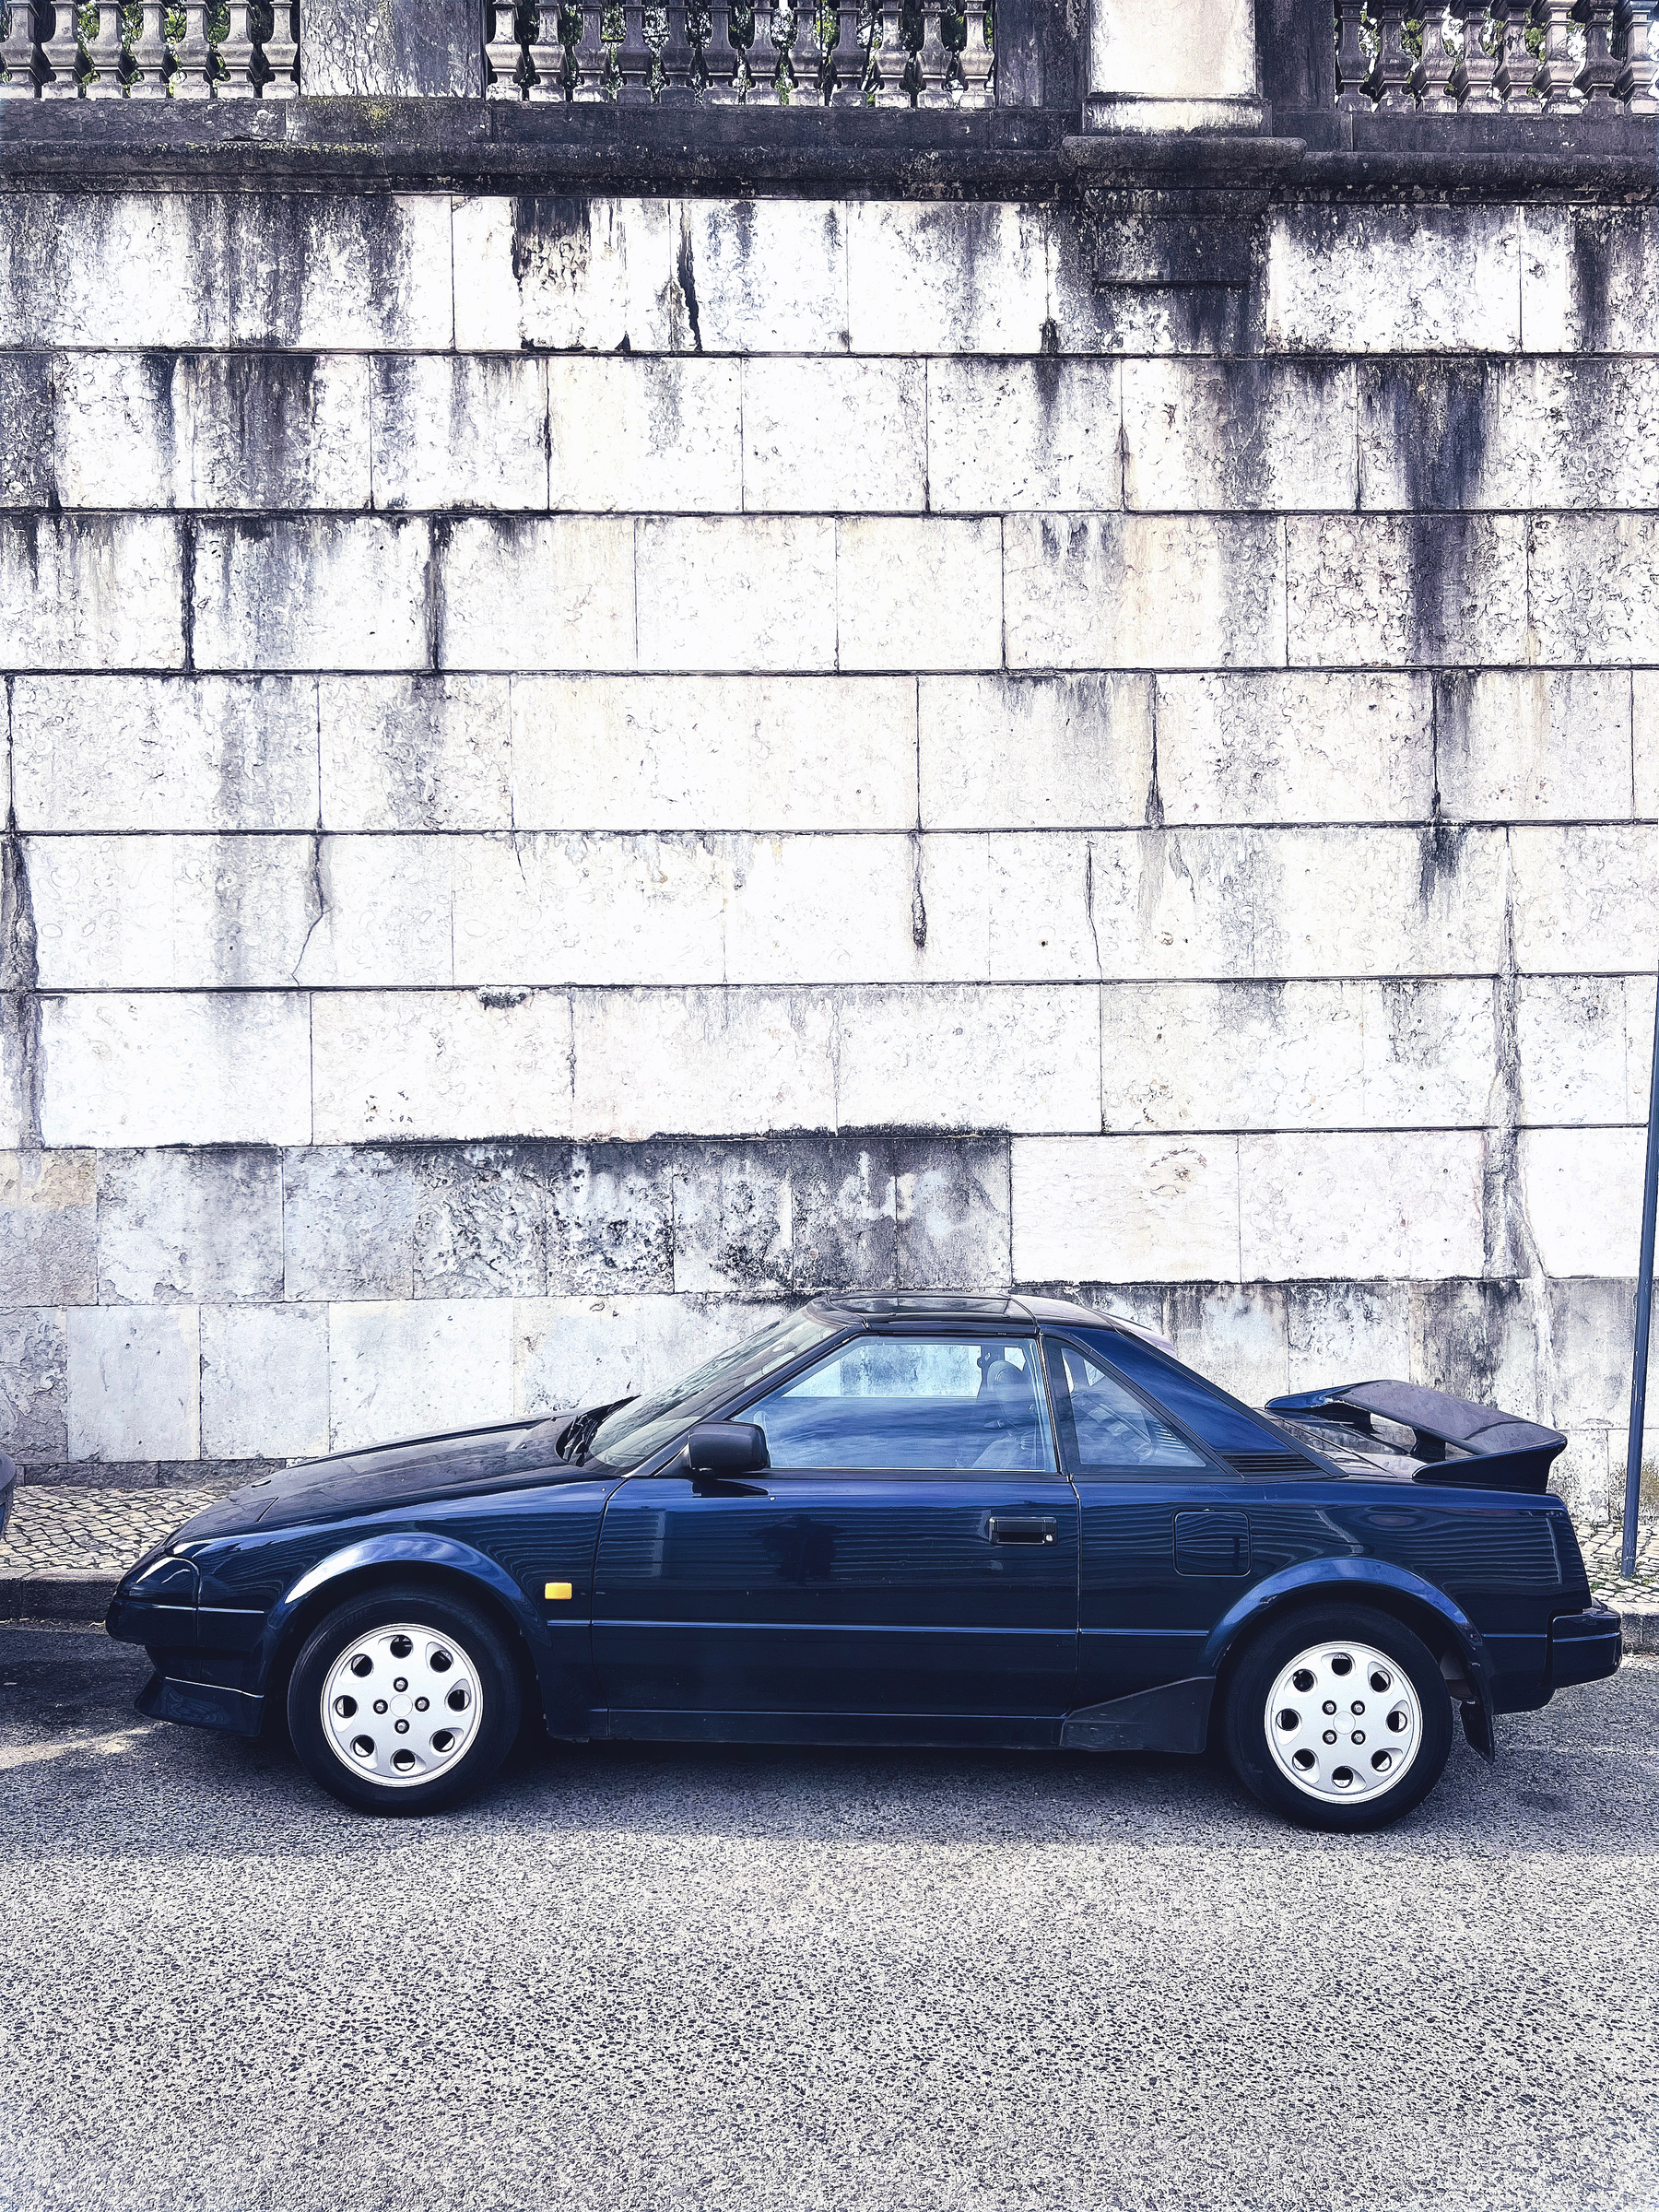 a dark blue car, unknown brand, against a white stone wall